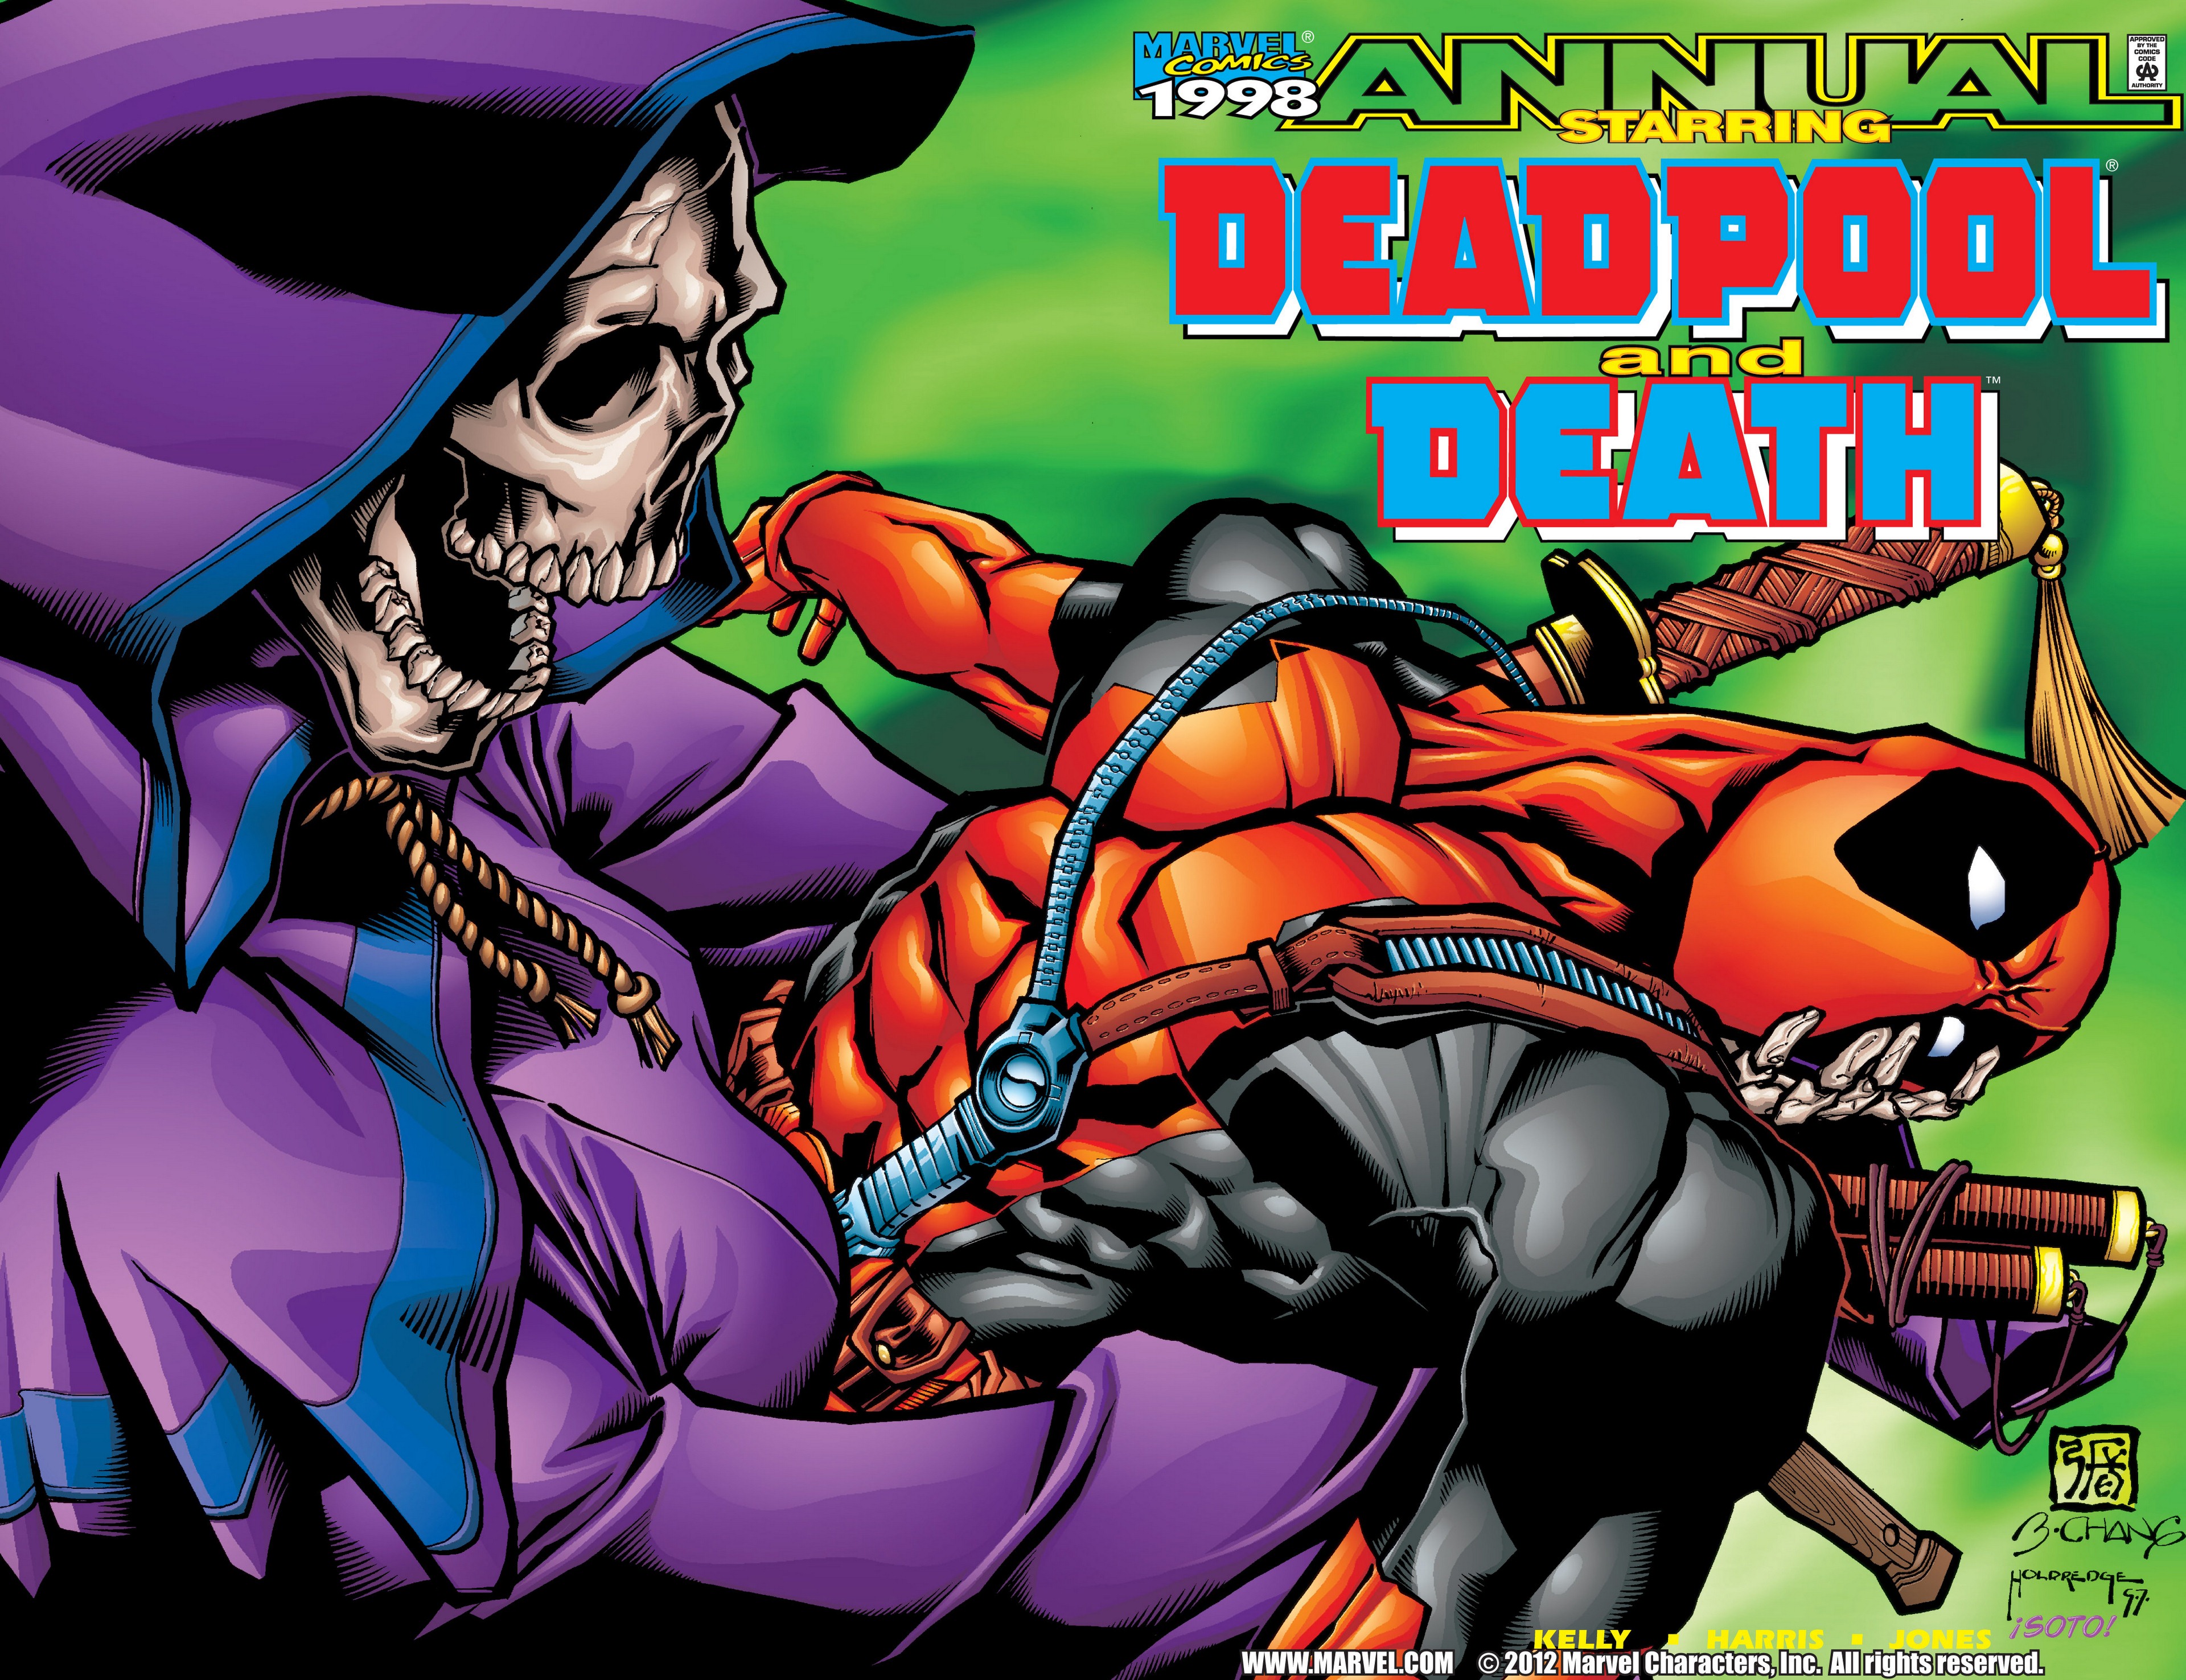 Deadpool Death 98 Full | Read Deadpool Death 98 Full comic online in high  quality. Read Full Comic online for free - Read comics online in high  quality .| READ COMIC ONLINE